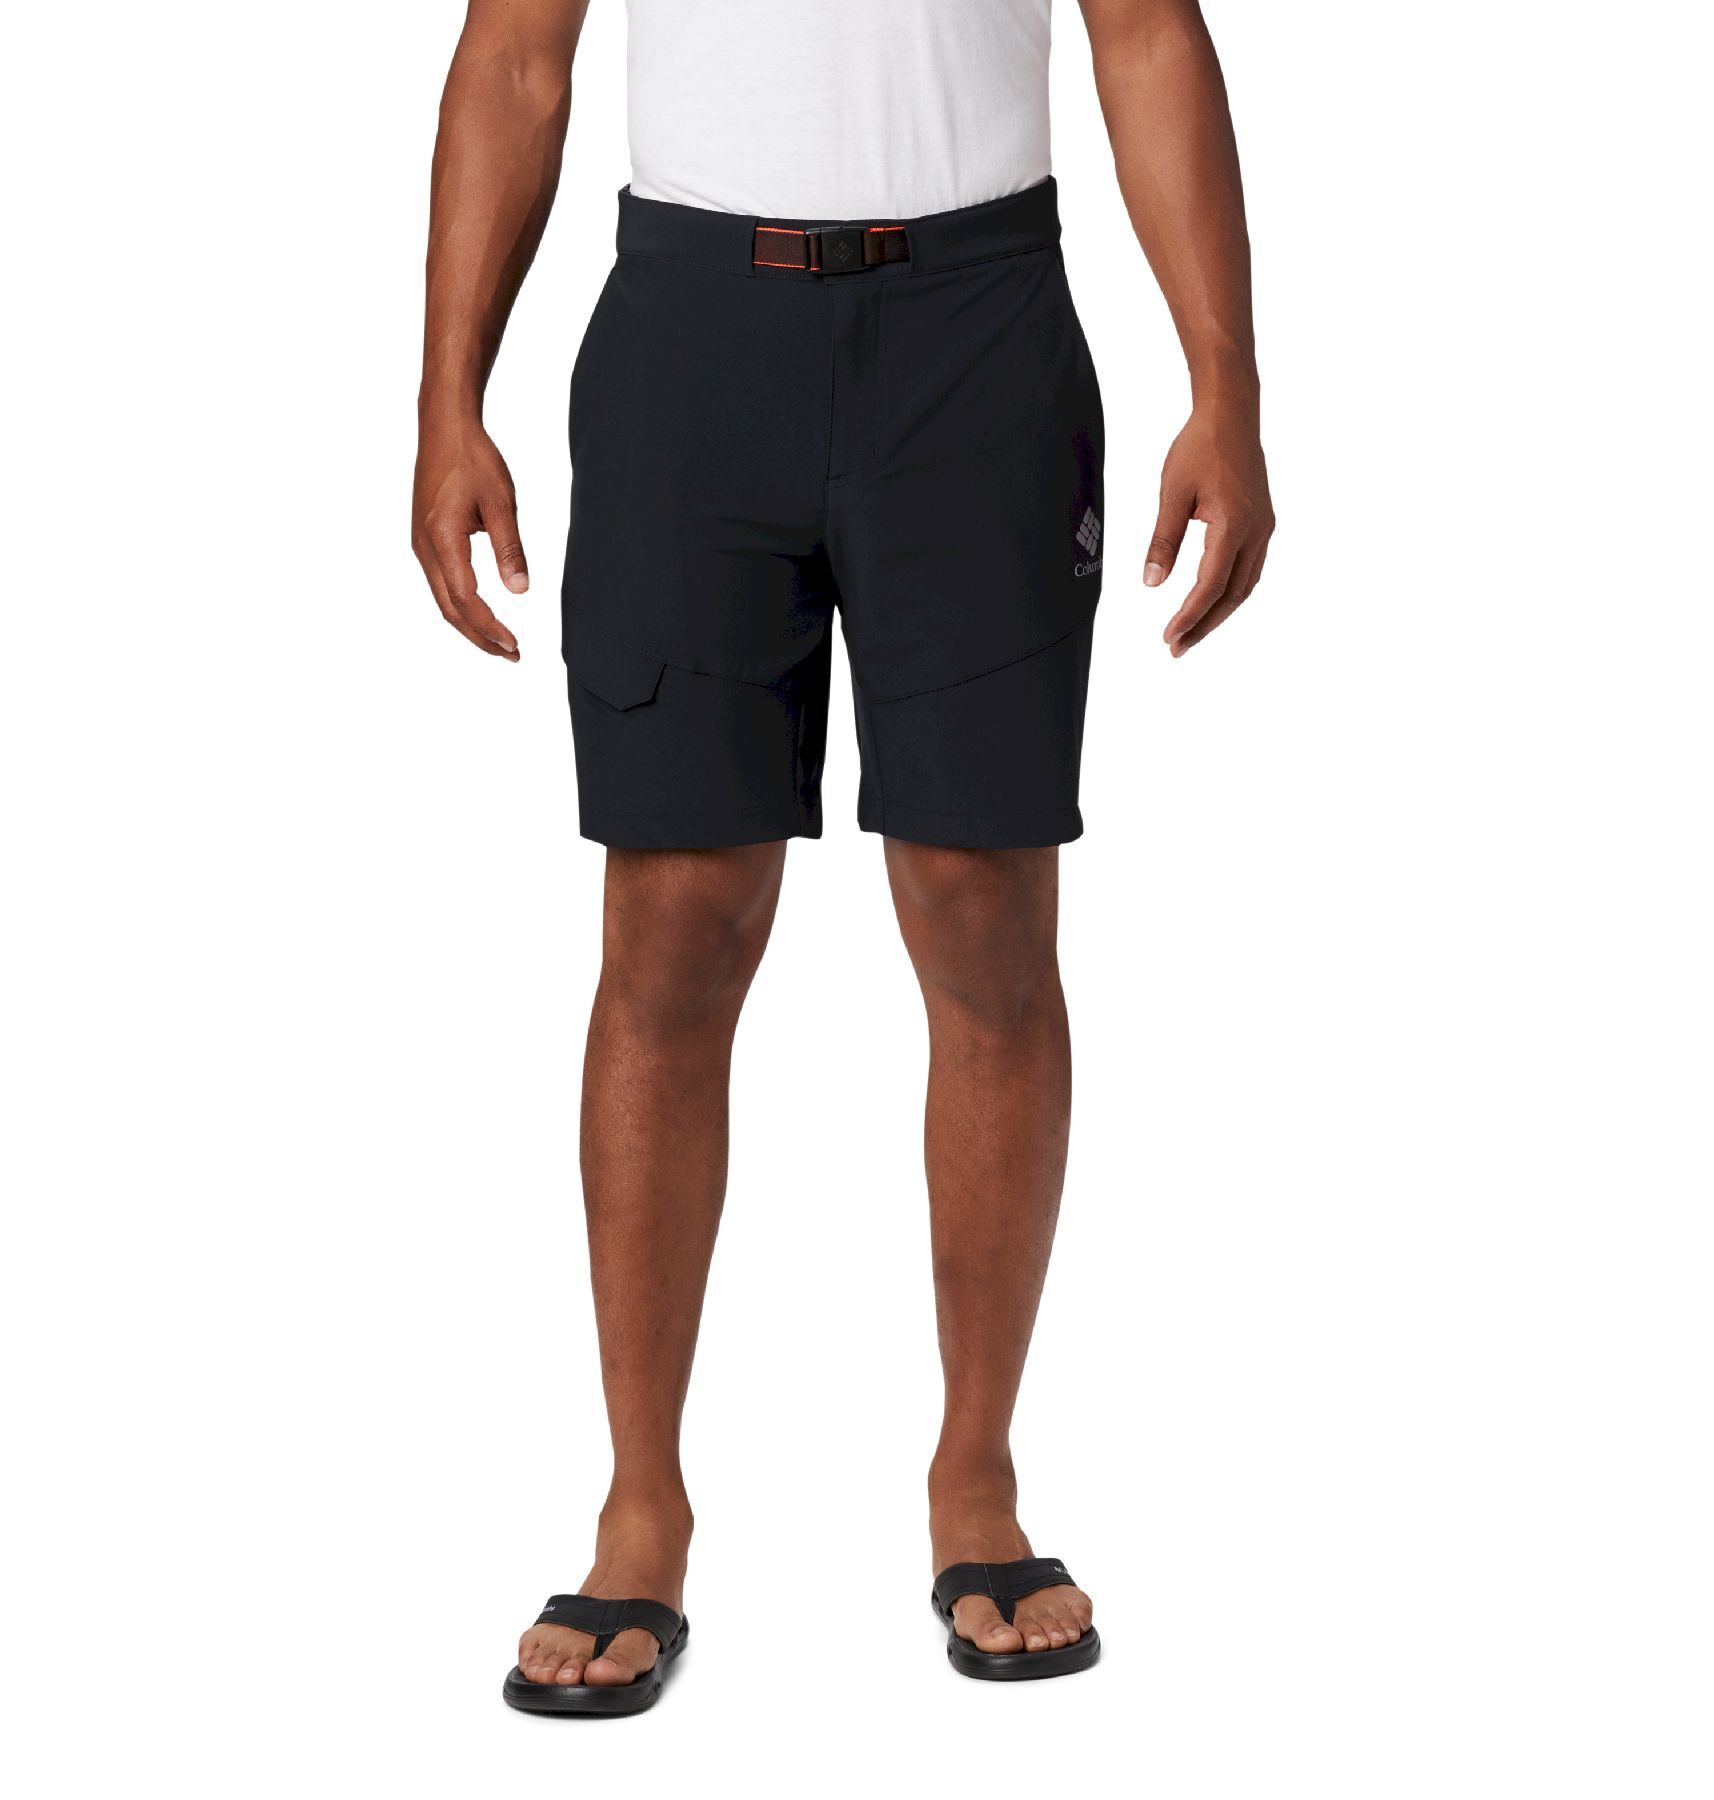 Columbia Maxtrail Short - Hiking shorts - Men's